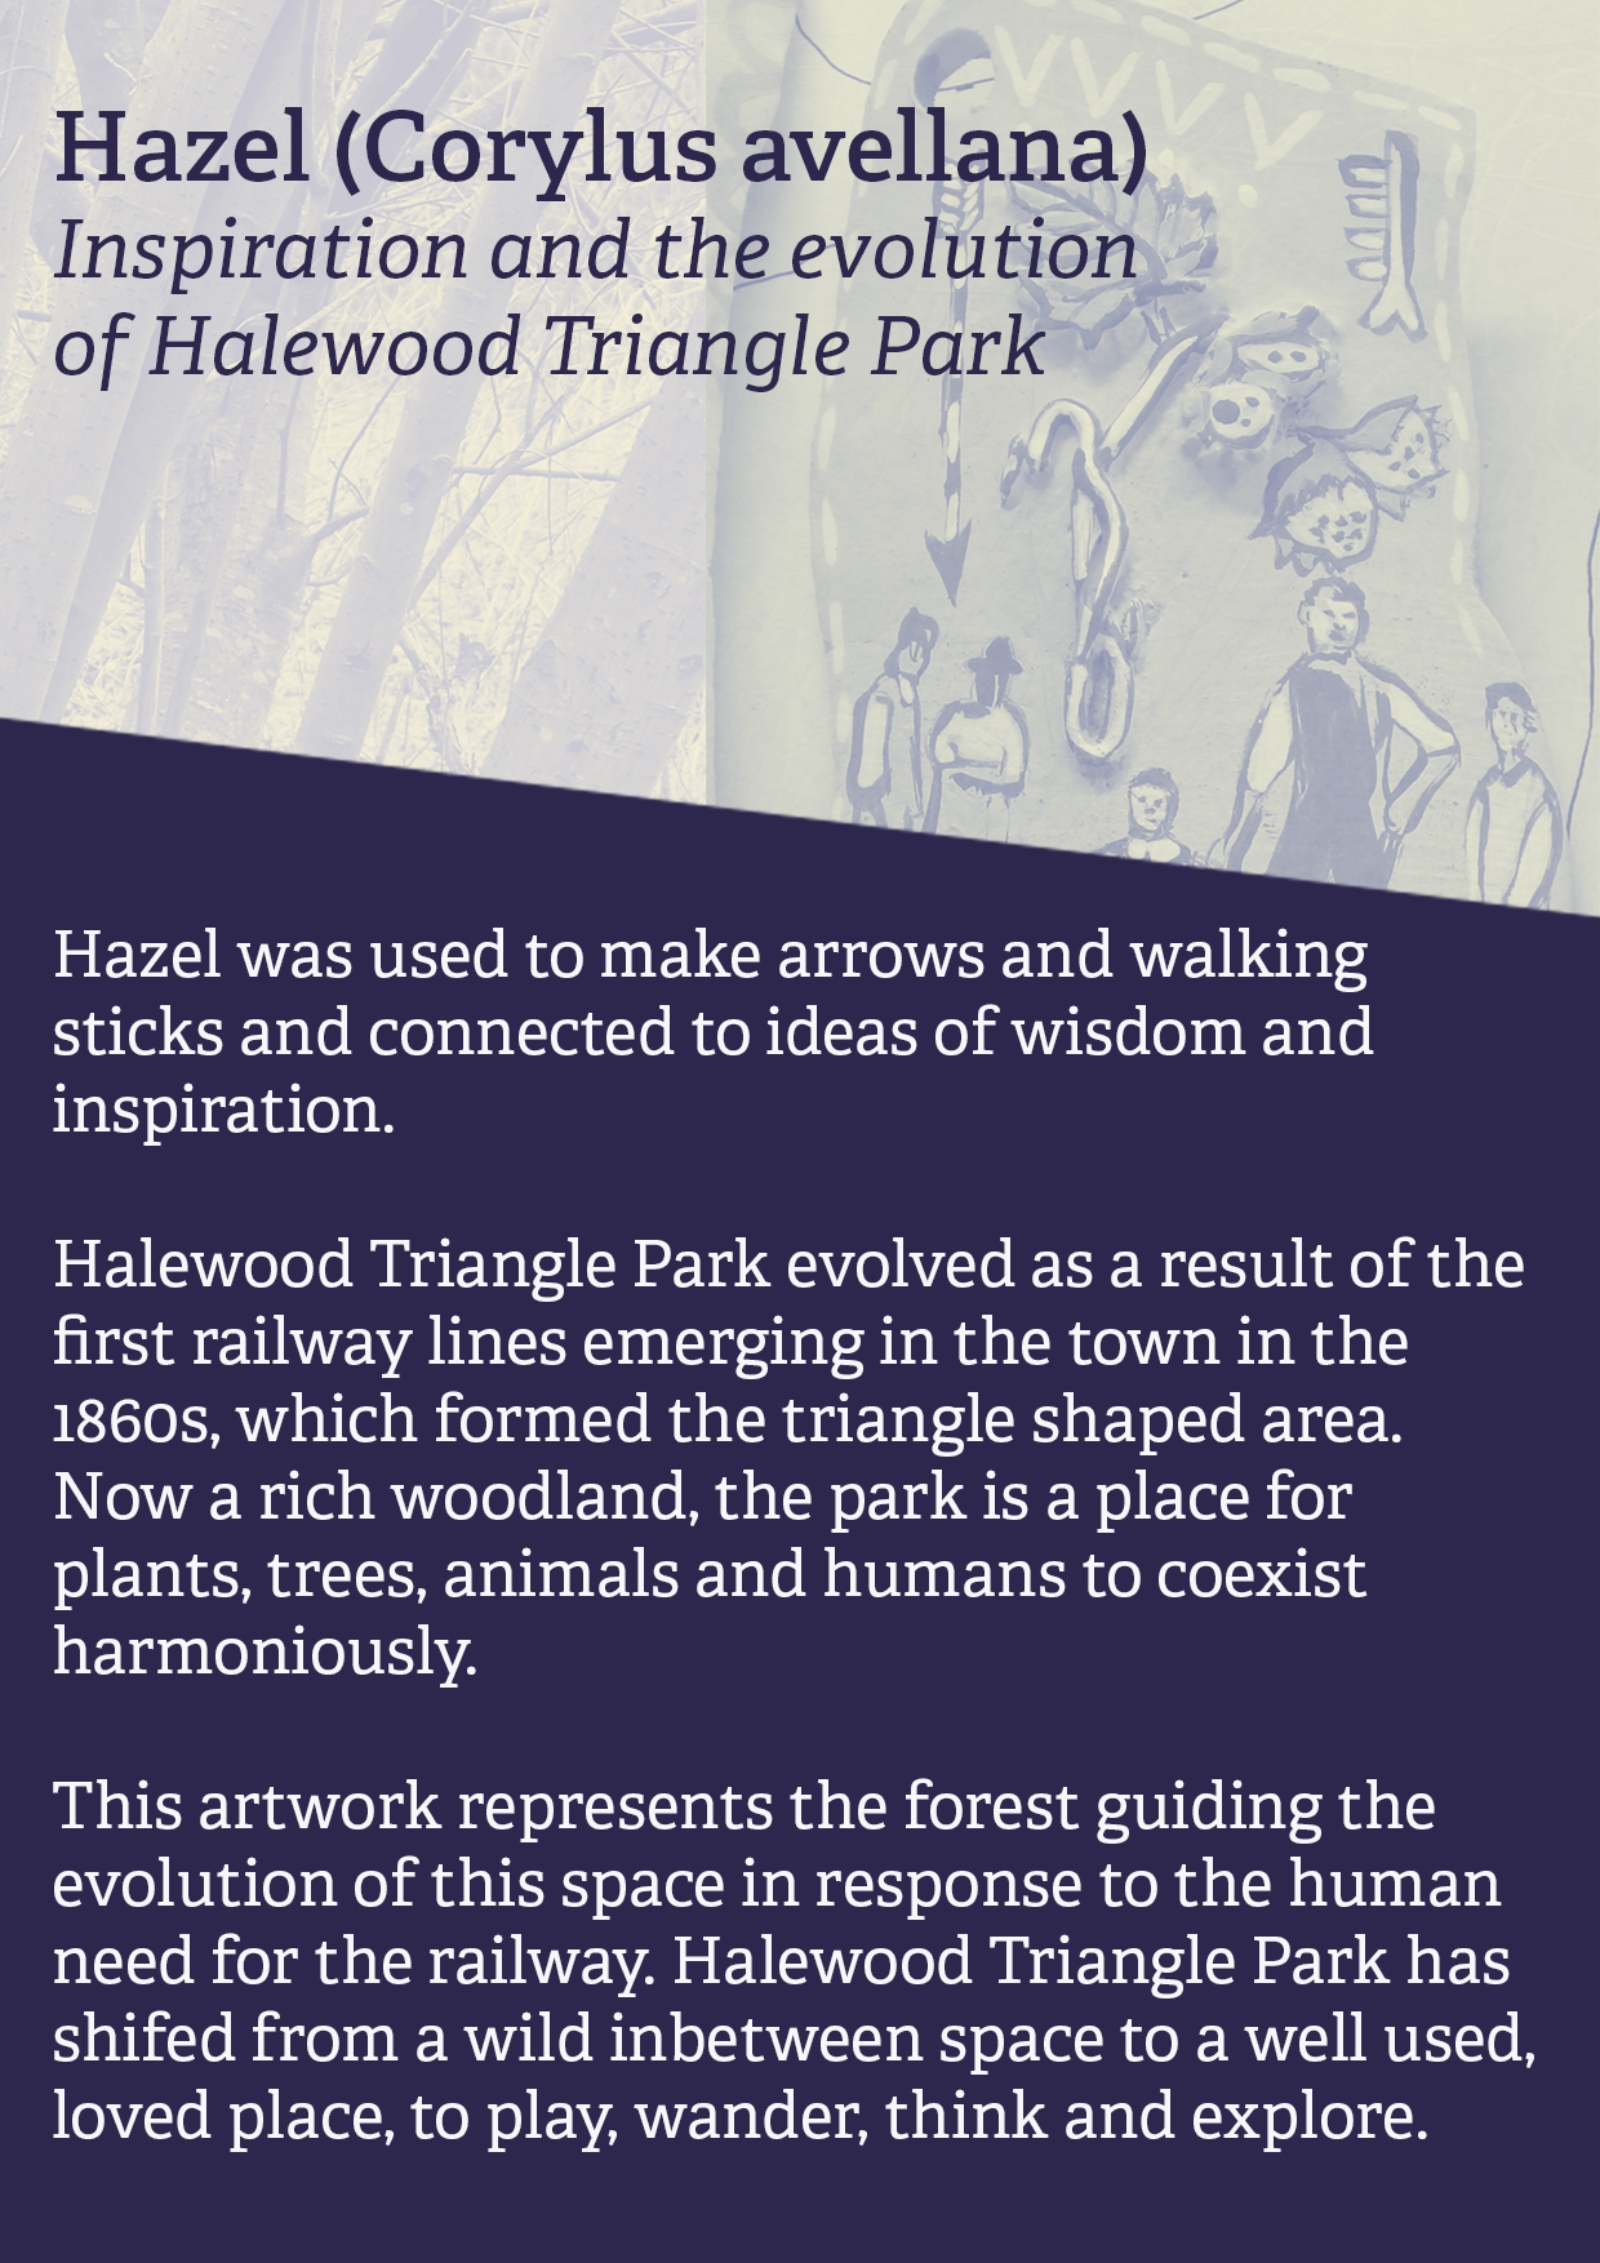 an information card for the hazel tree artwork